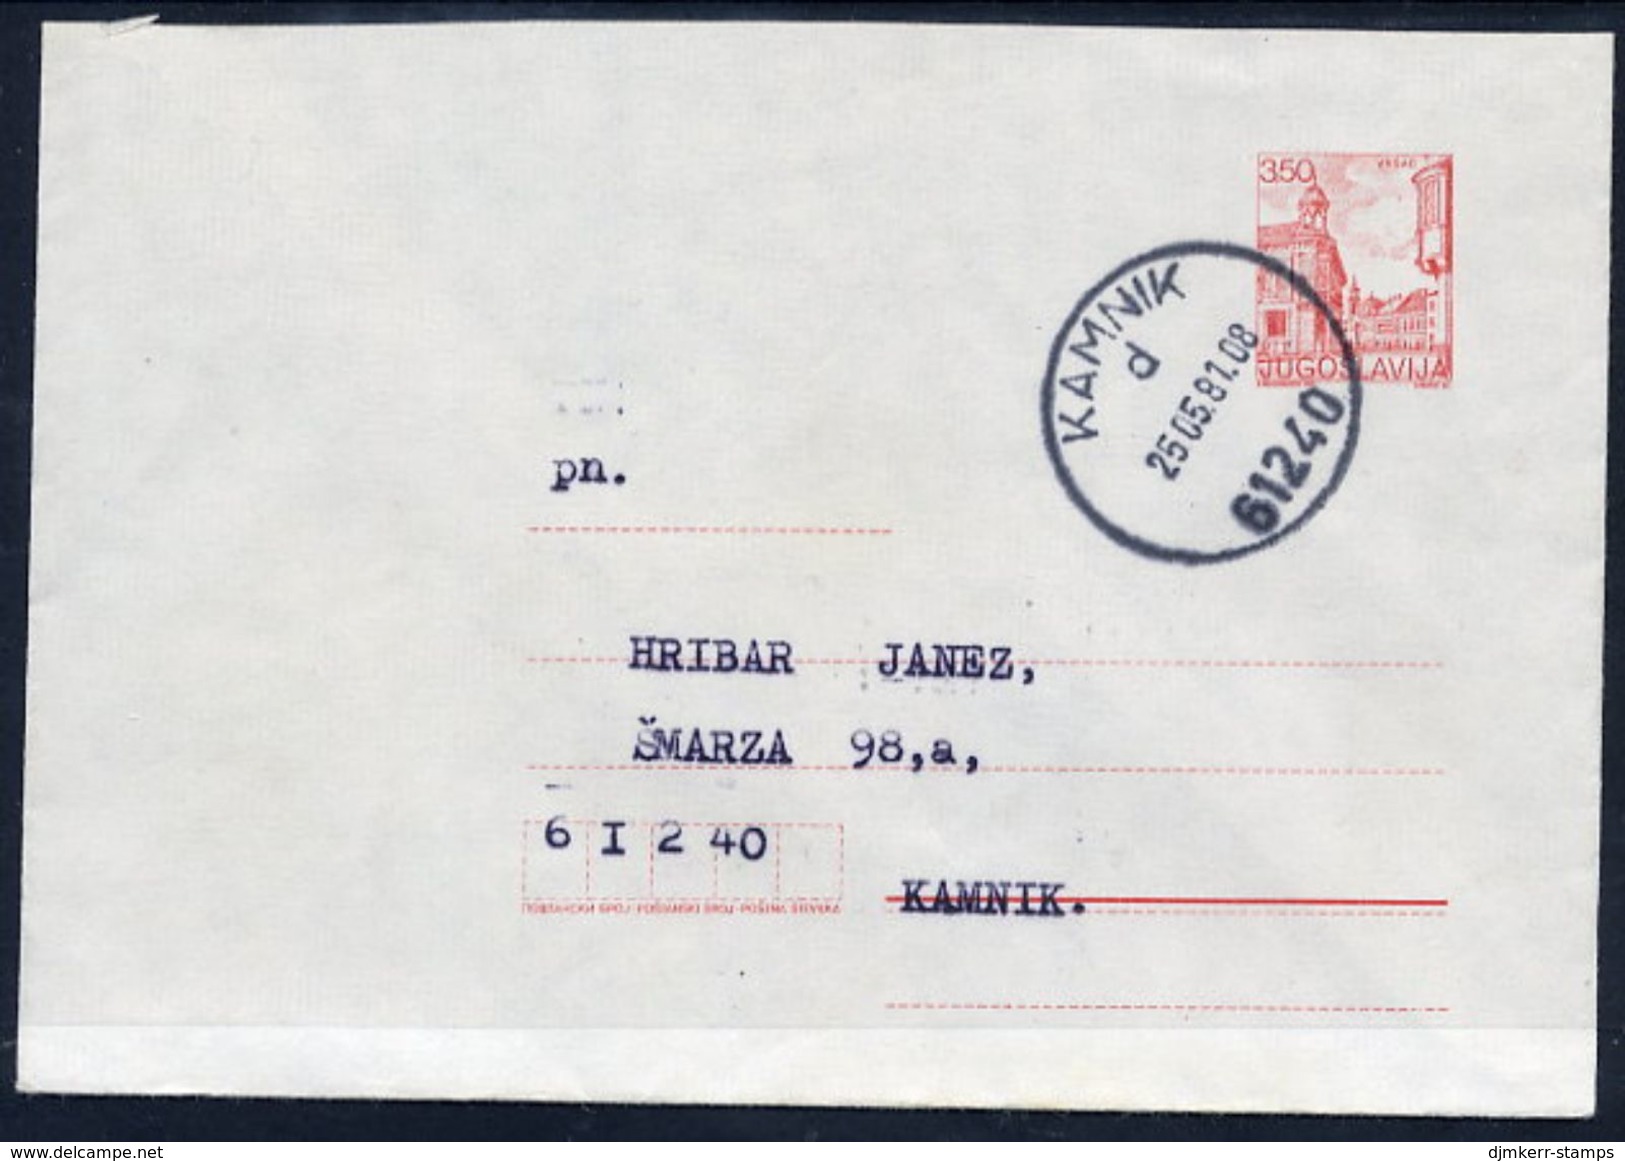 YUGOSLAVIA 1981 Tourism 3.50 D.stationery Envelope Used Without Additional Franking.  Michel U63 - Ganzsachen